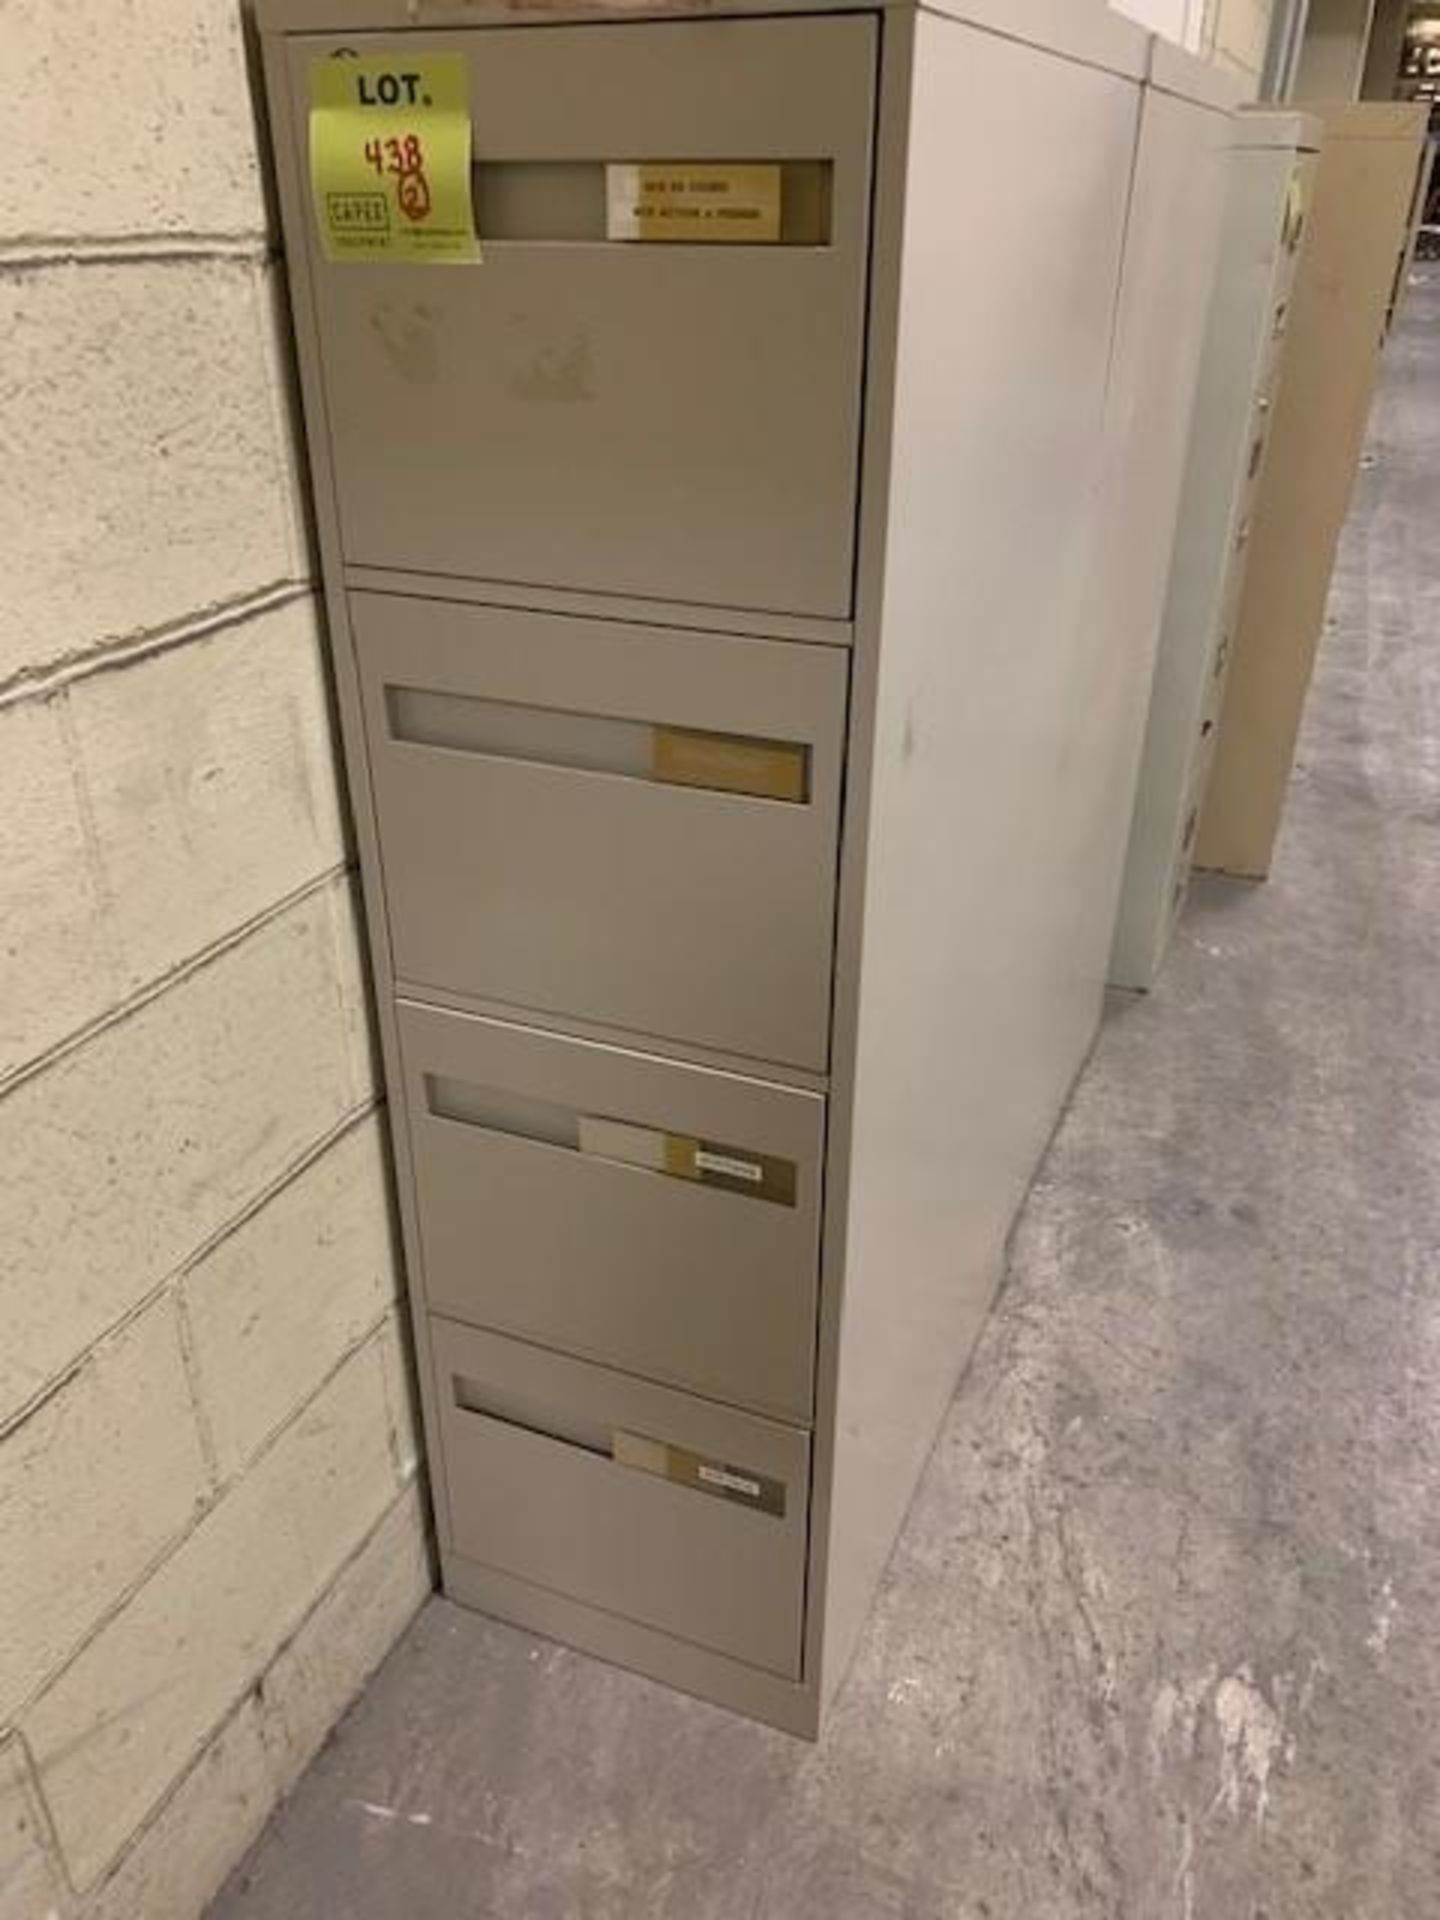 Lot of 2 vertical filling cabinet - Image 2 of 2